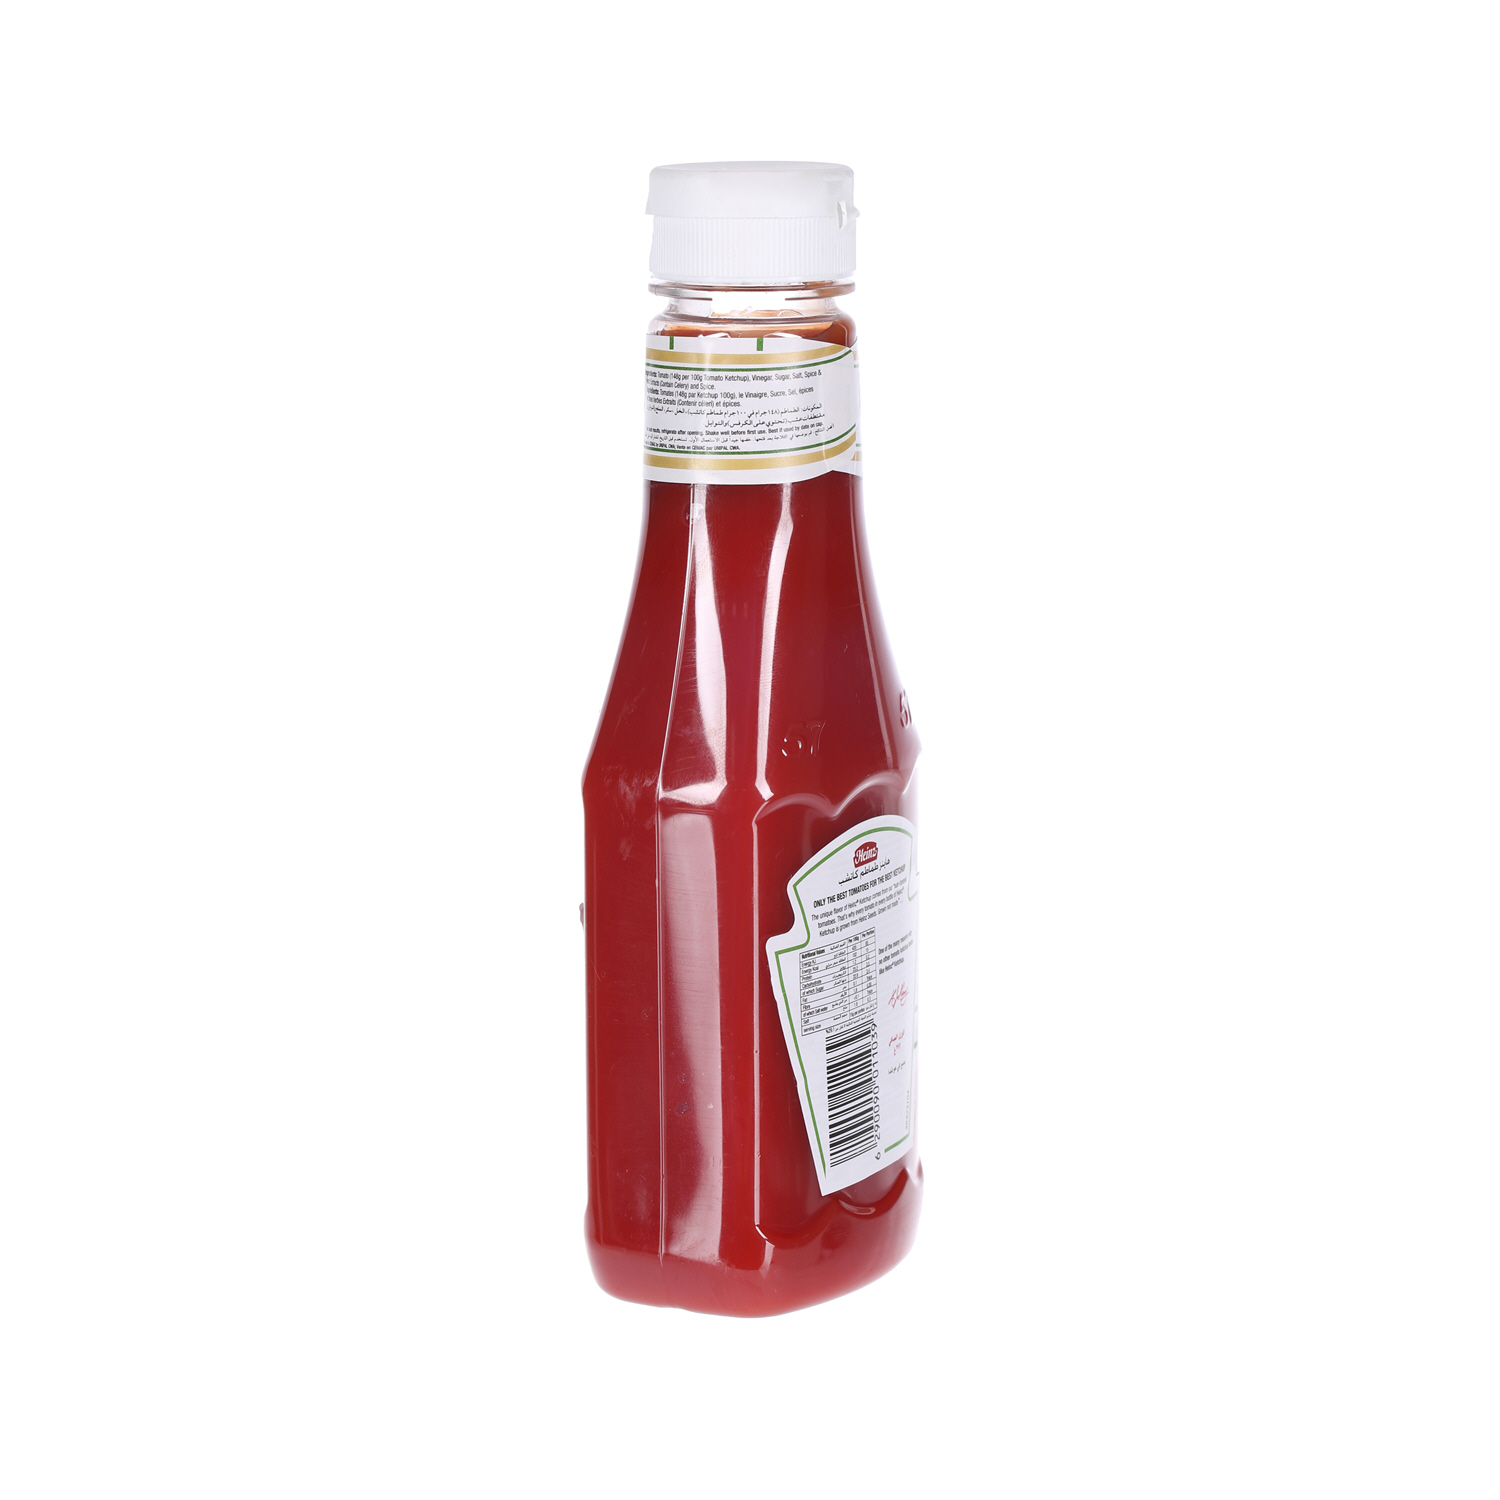 Heinz Ketchup Plastic Bottle 342gm